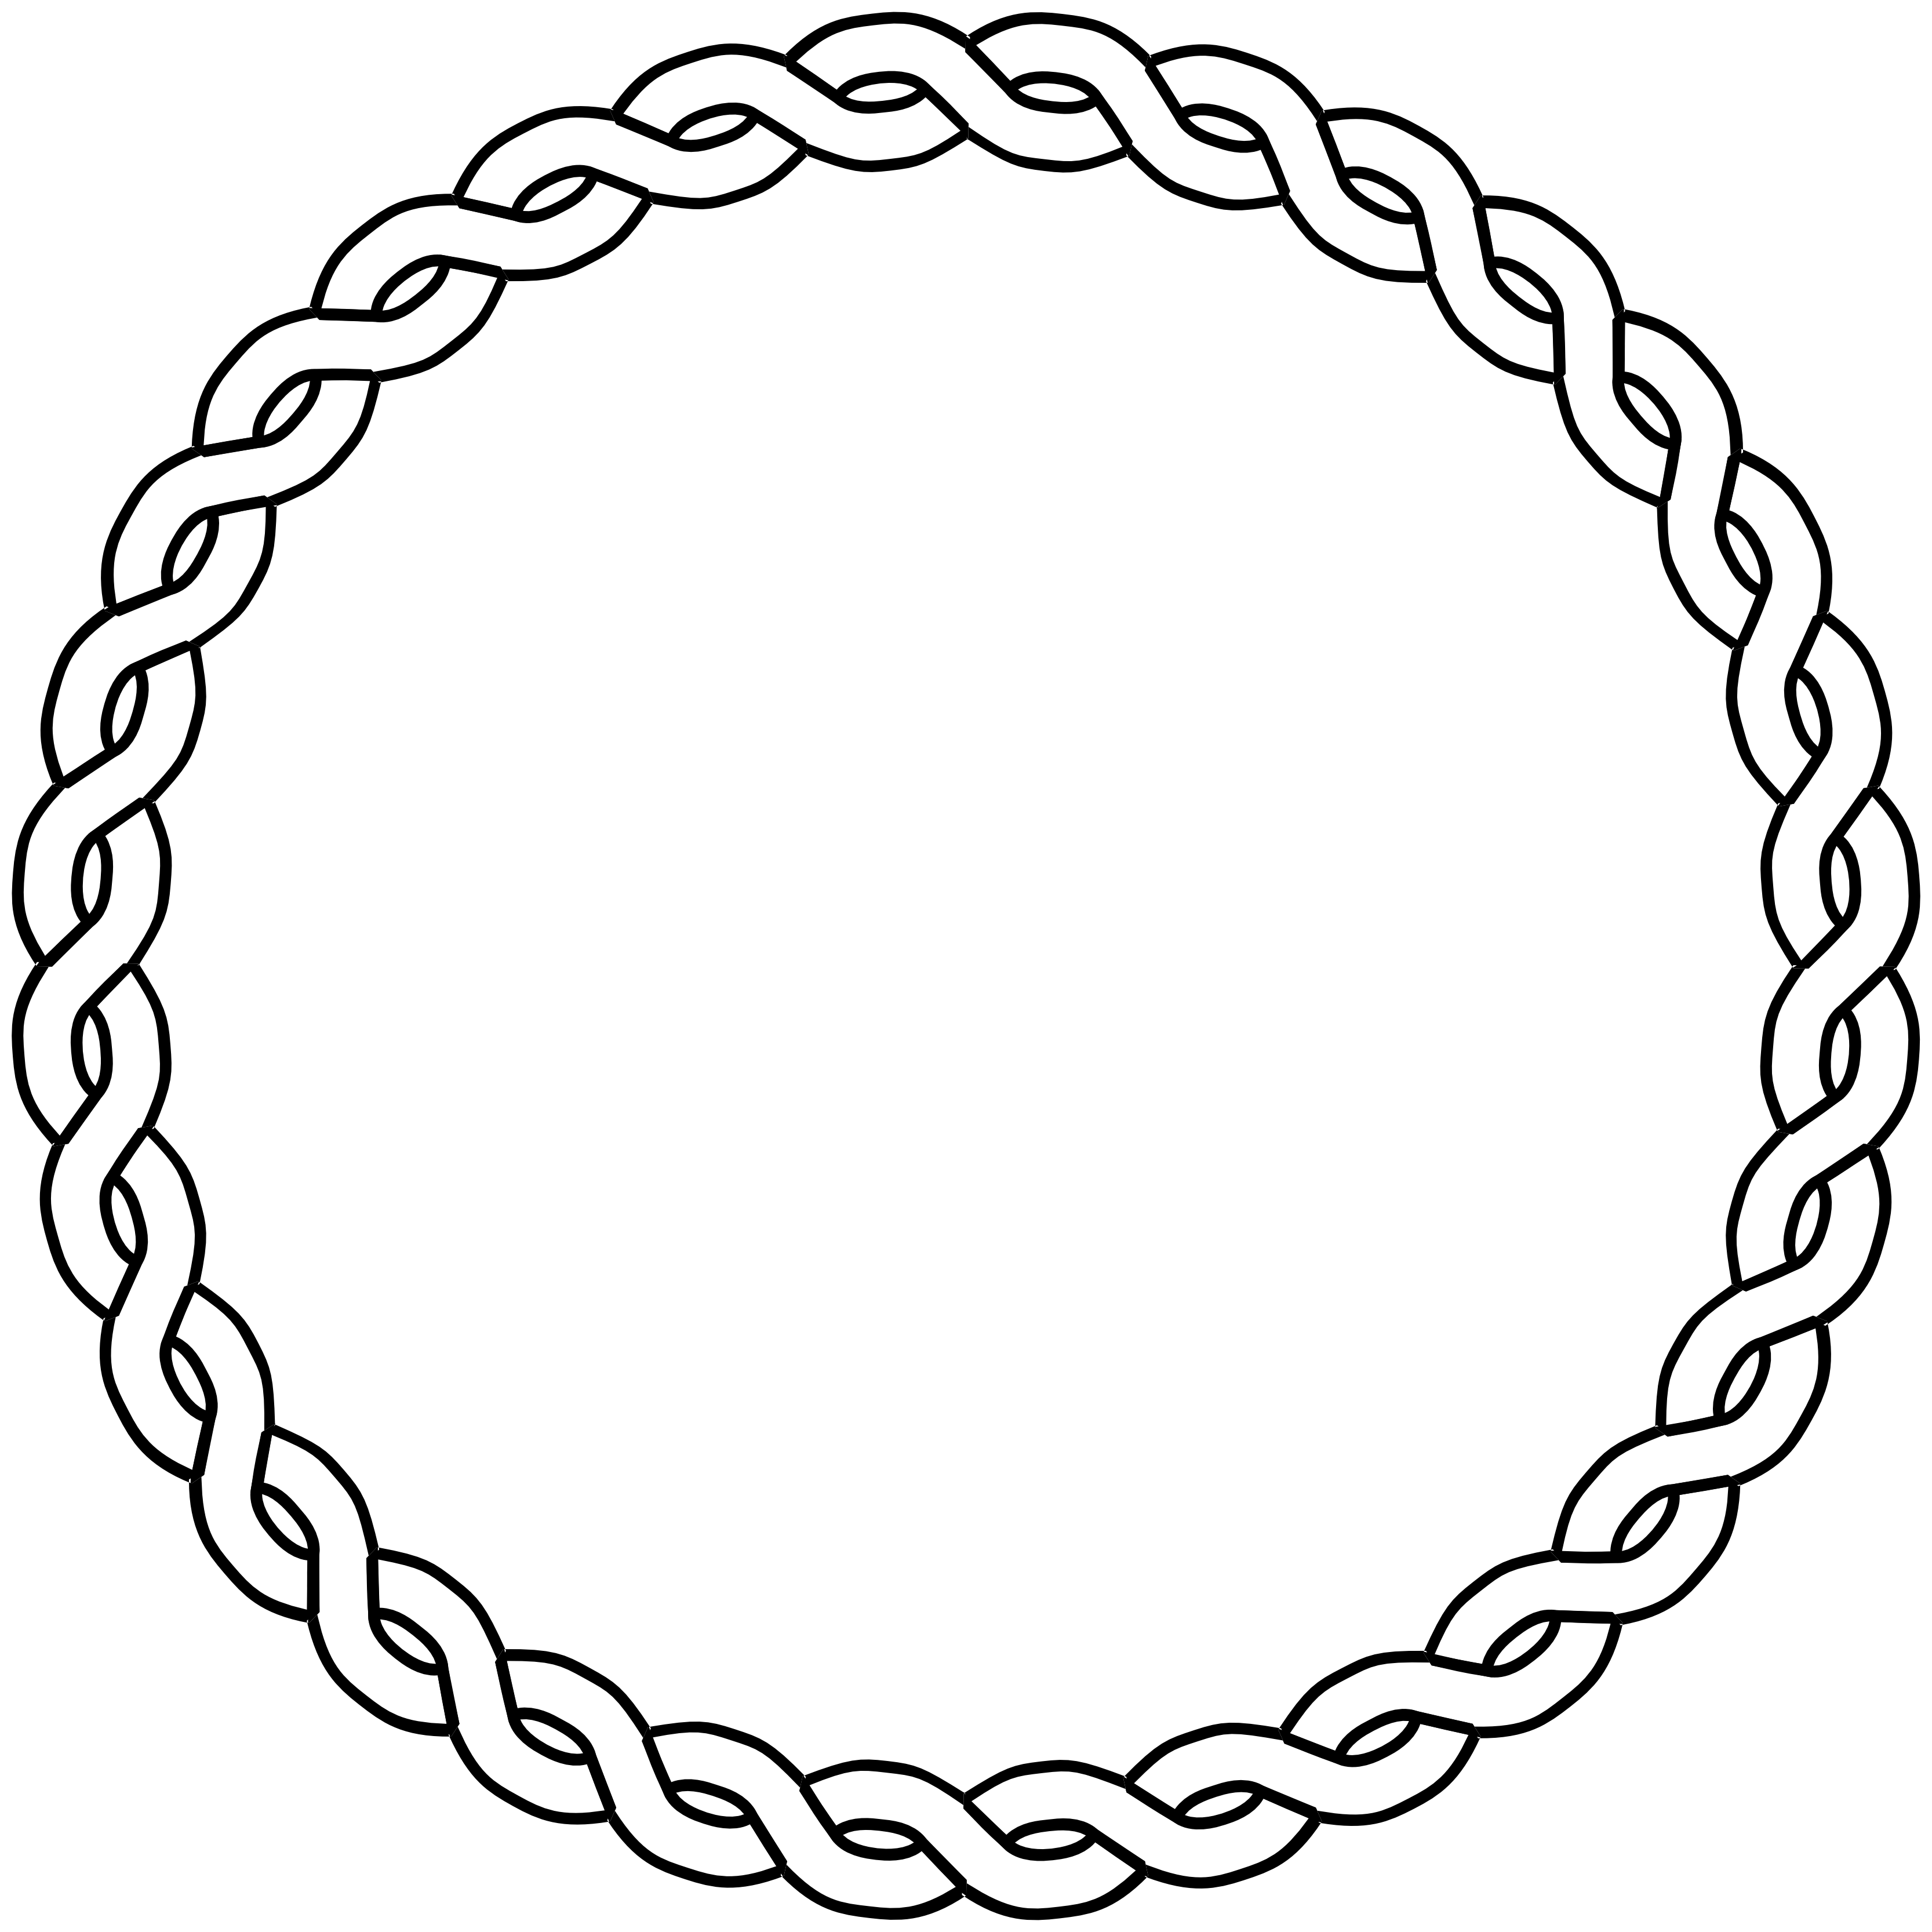 rope border circle black white line art coloring ... - ClipArt ...